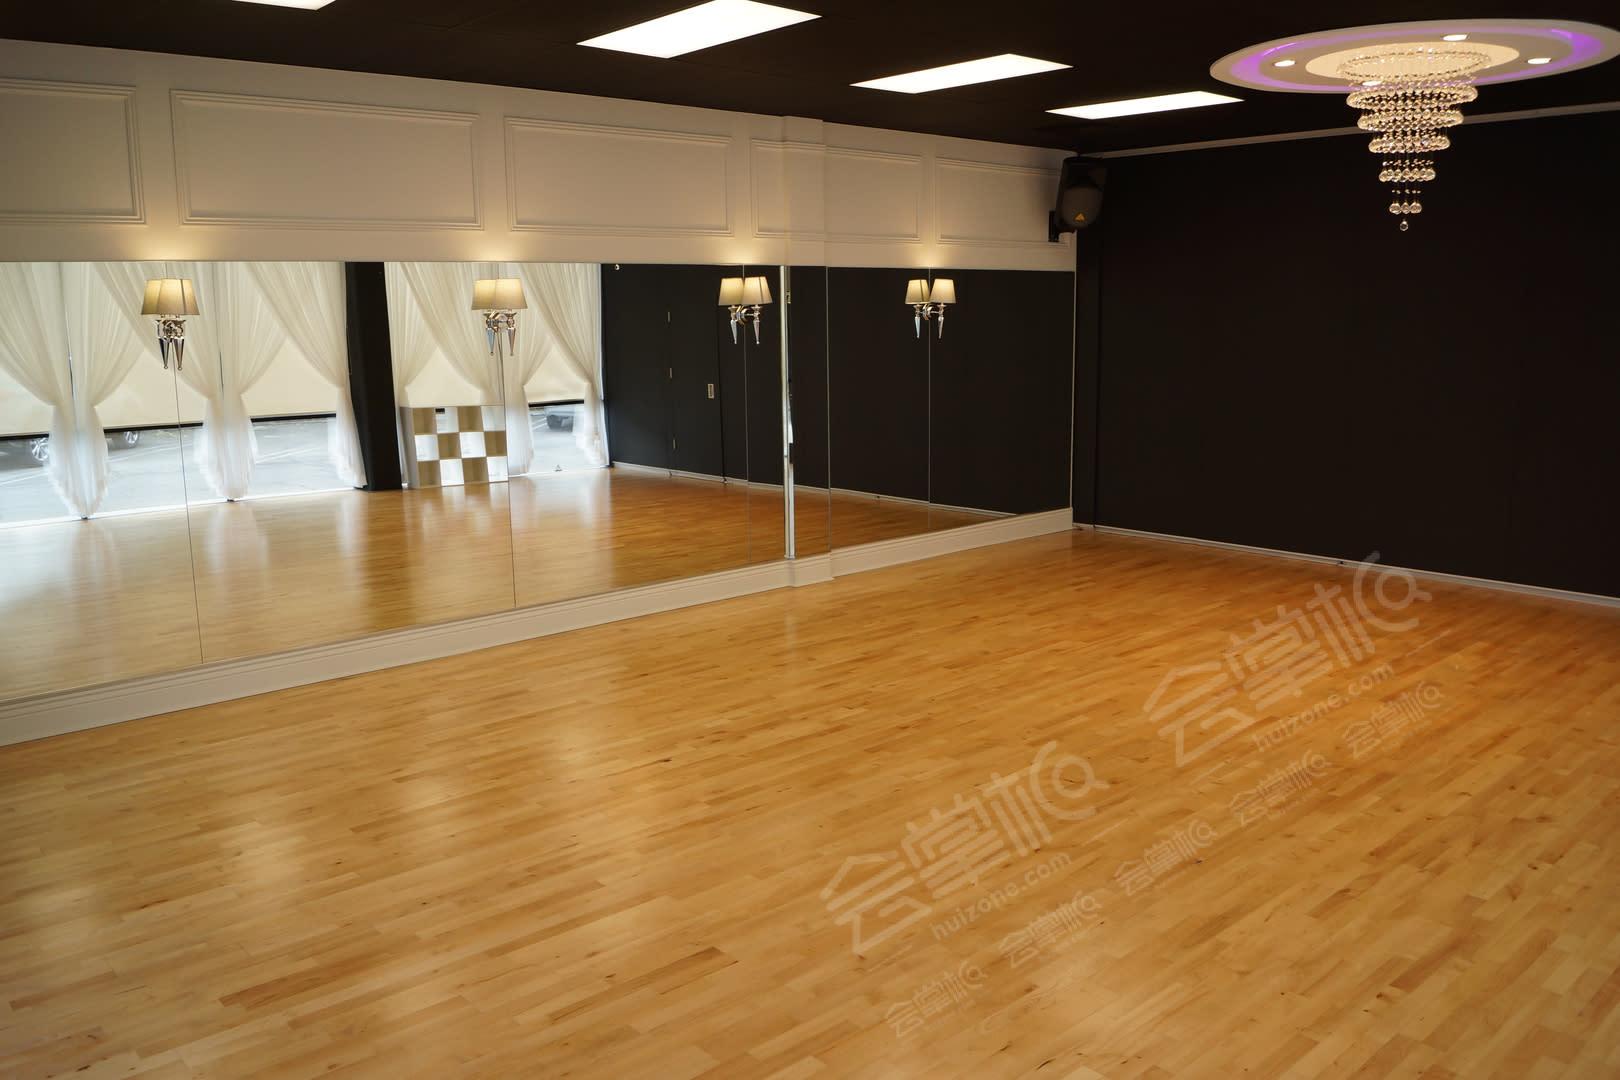 Dance Studio/Production/Event Space in Burbank (Room 1)